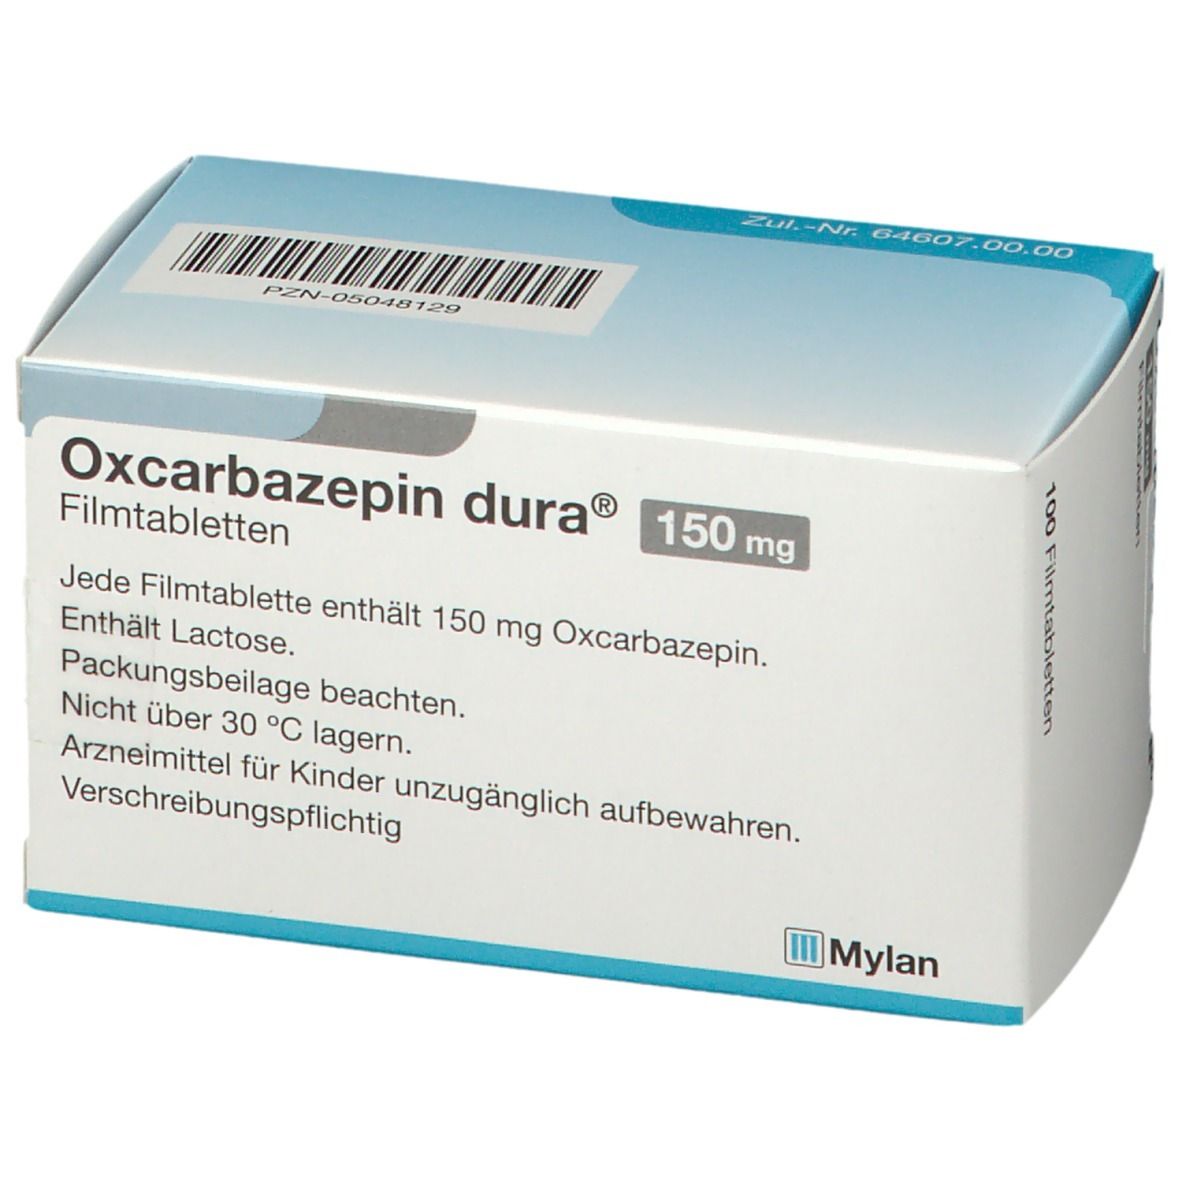 Oxcarbazepin dura® 150 mg